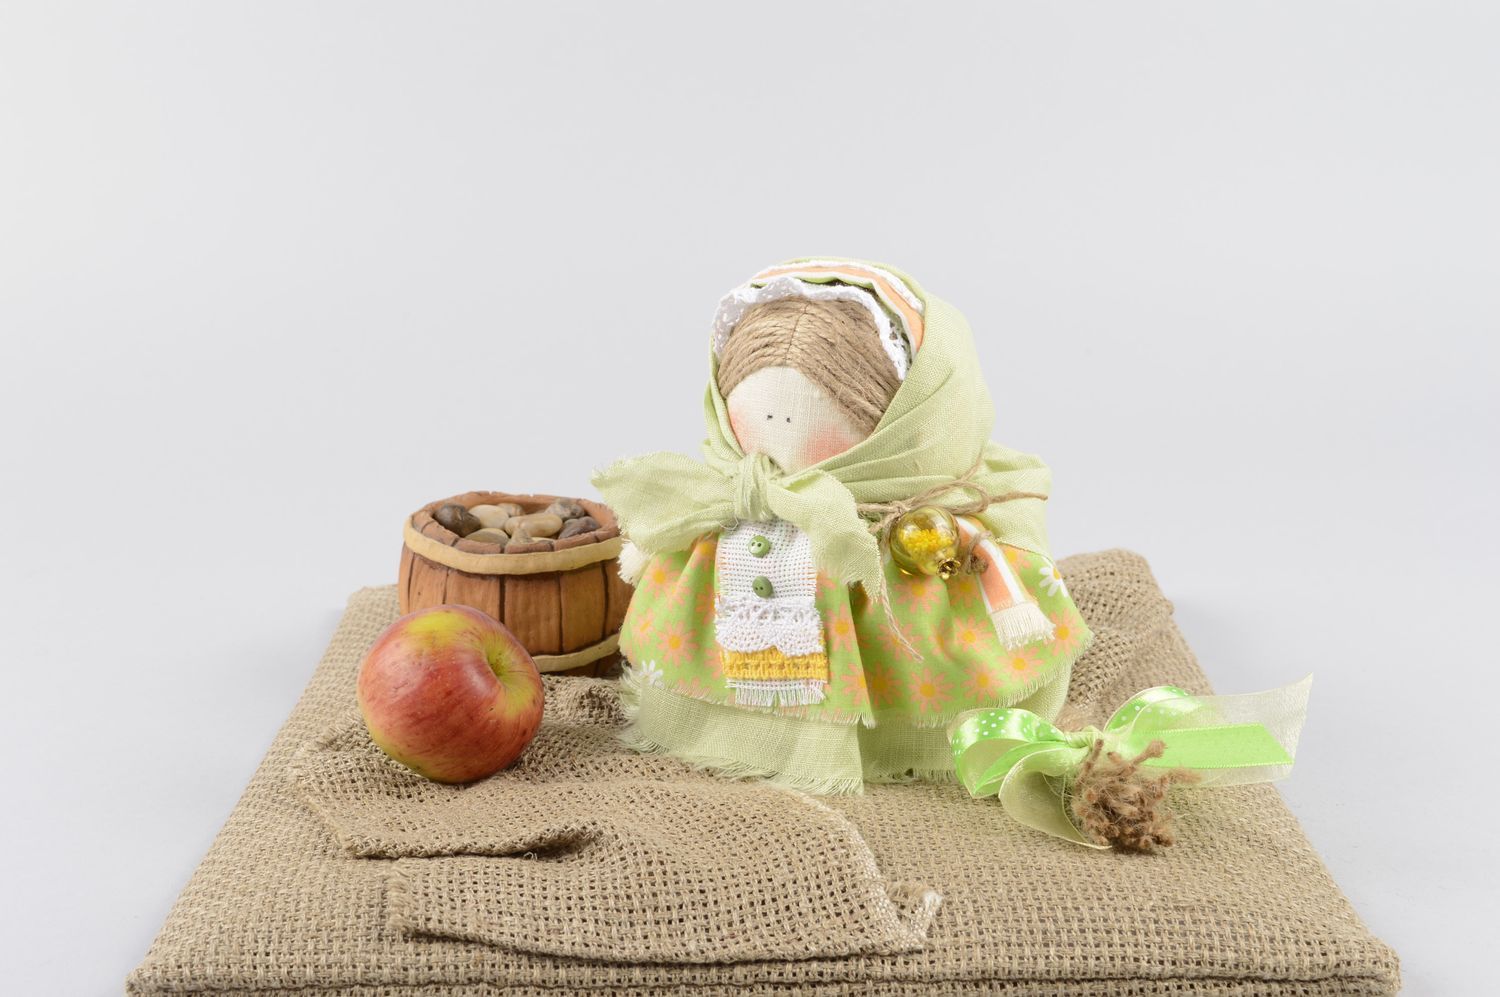 Handmade doll designer doll decorative use only unusual gift nursery decor photo 5